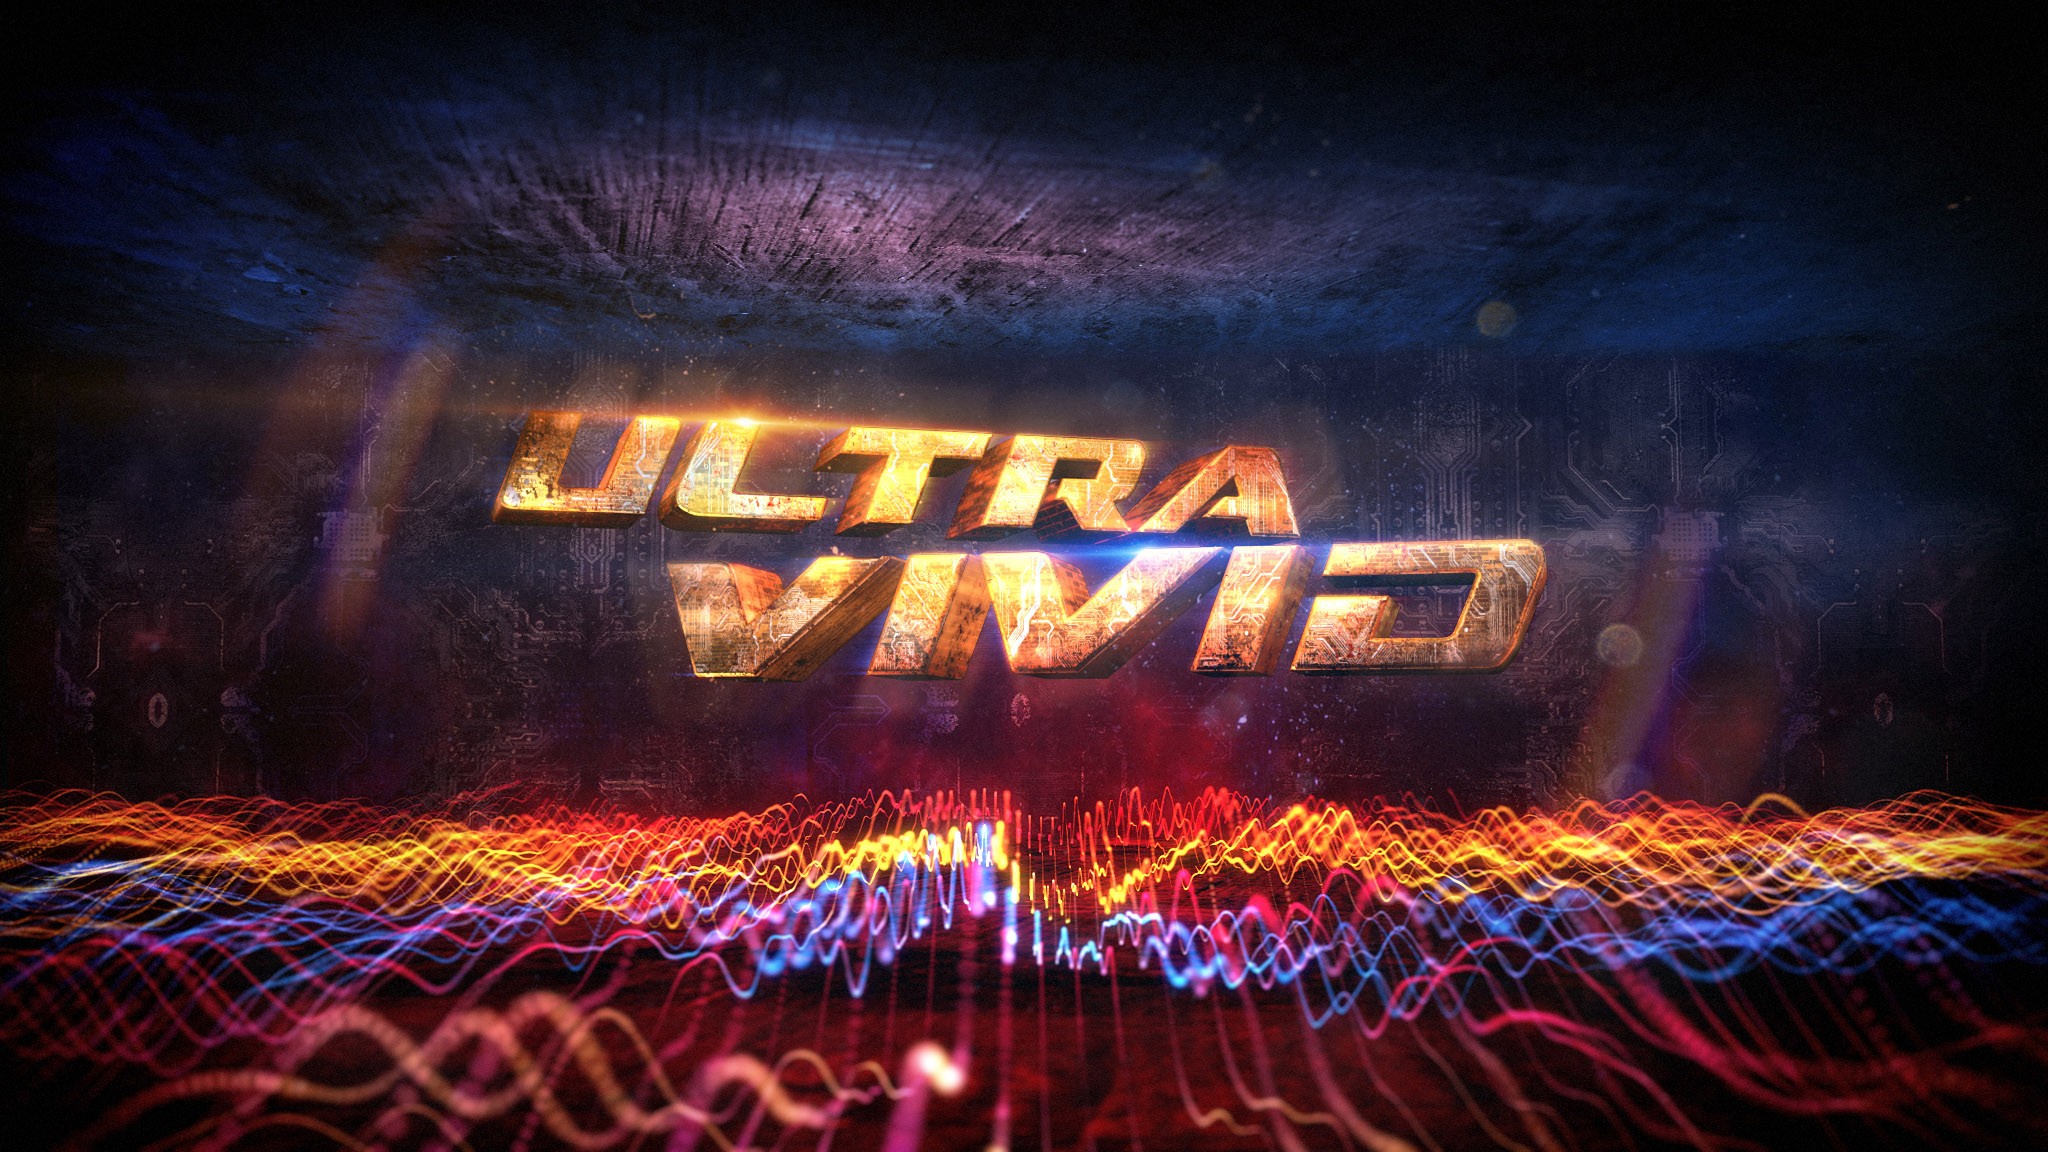 UHD_MC_Spctrm_UltraVivid_v01_Bh_web.jpg